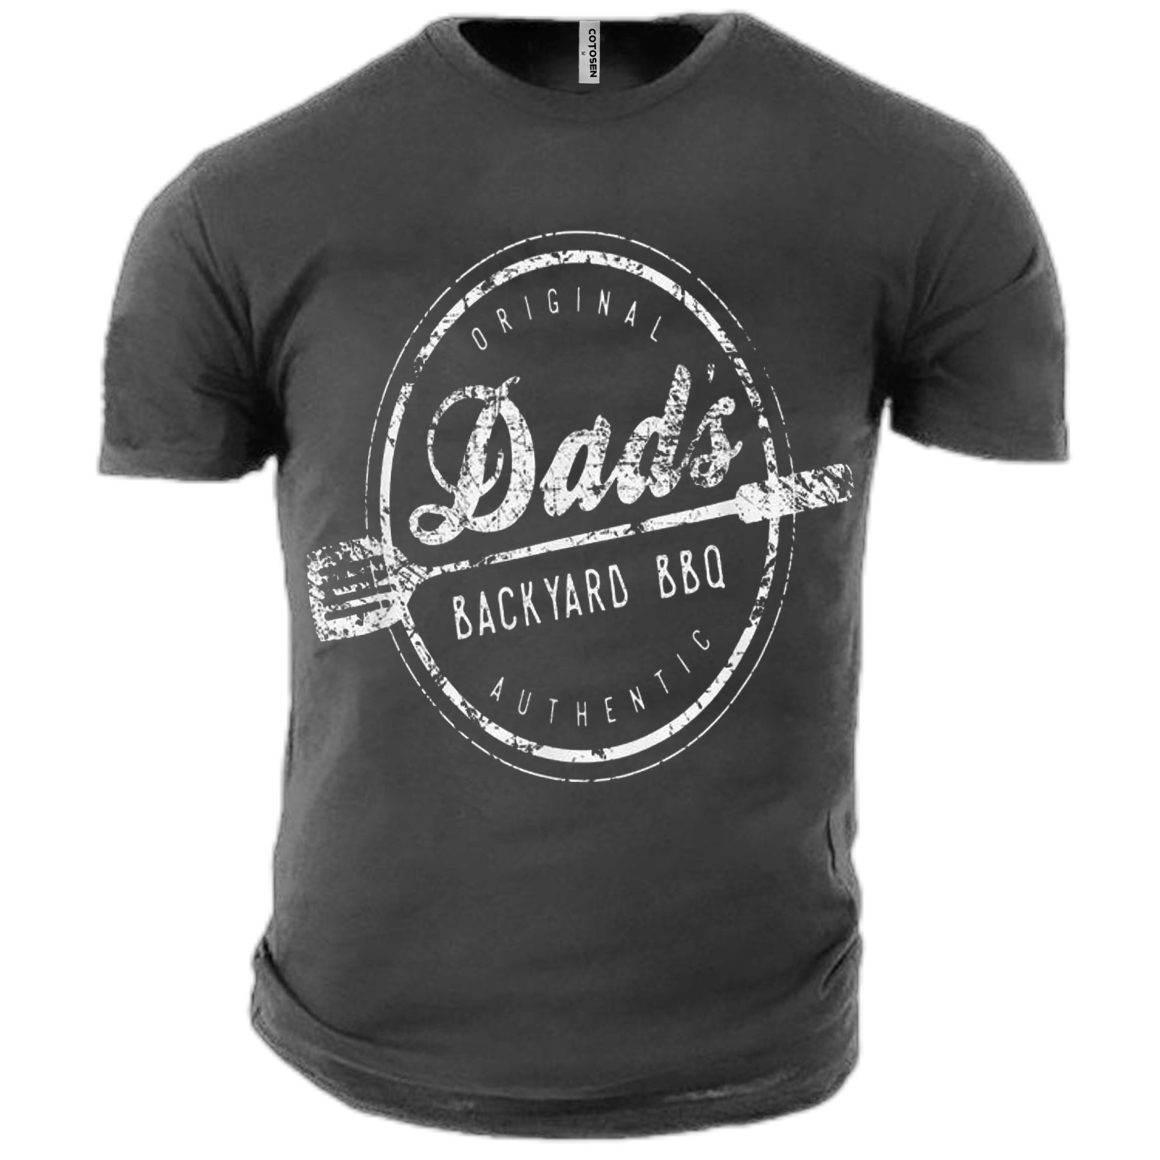 Men's Dads Backyard Bbq Chic Grilling Print Cotton T-shirt